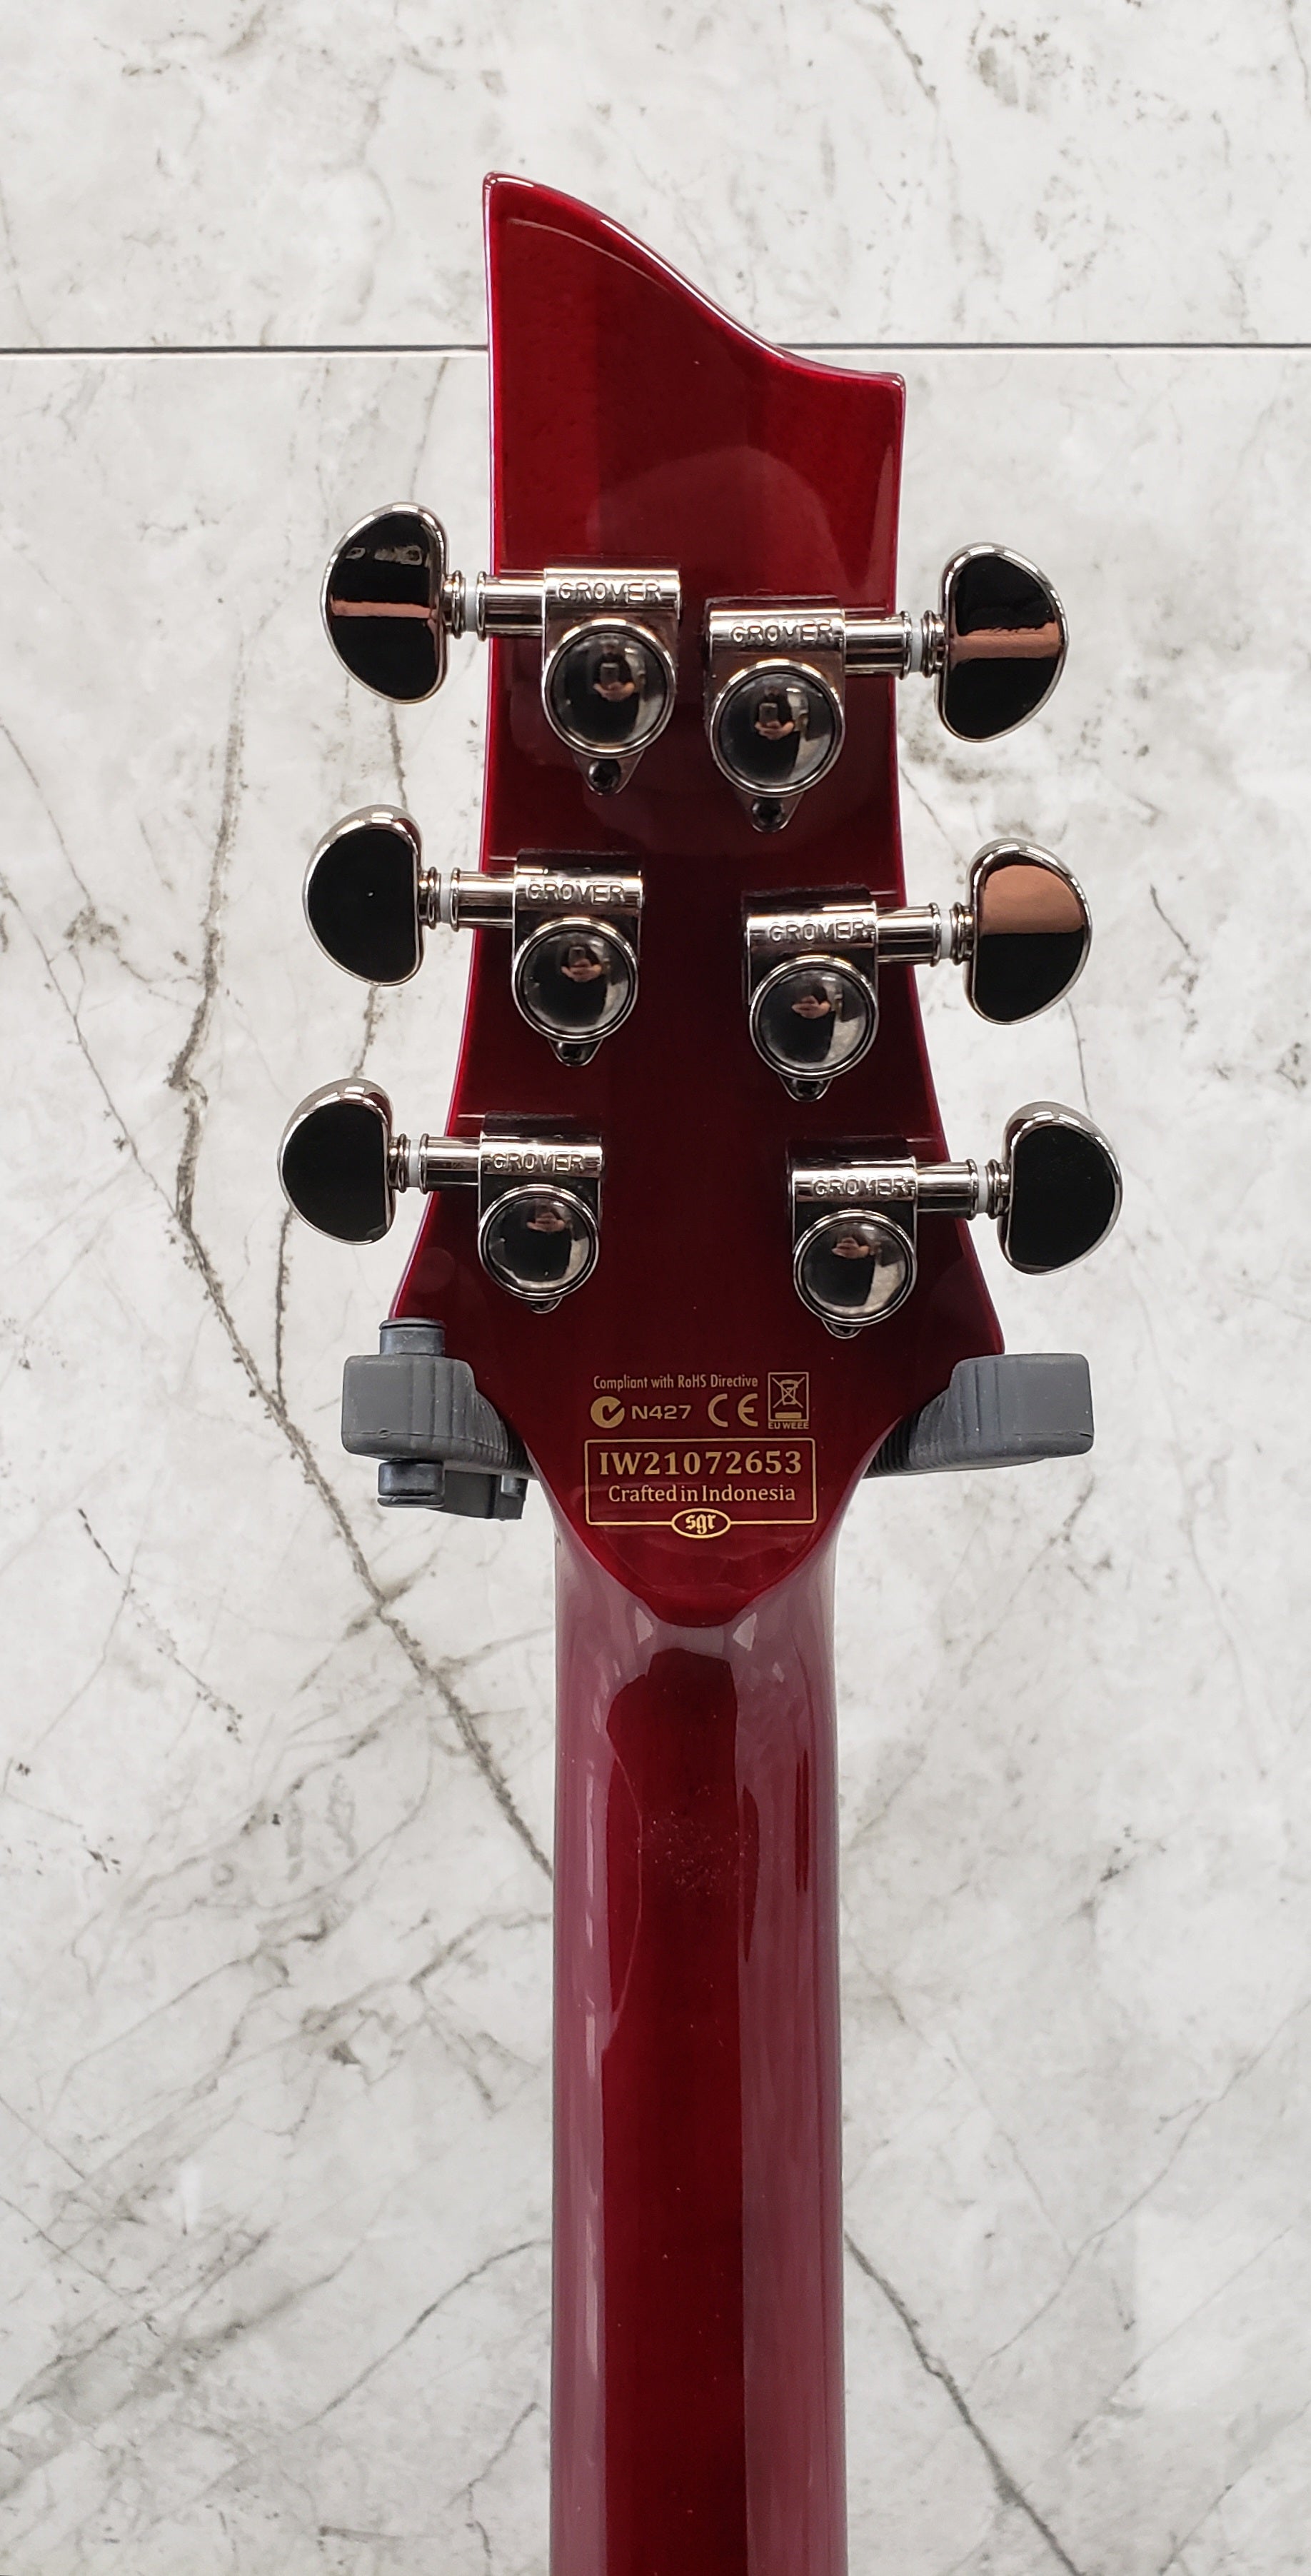 Schecter Hellraiser Series HR-C-1-FR-BCH Black Cherry Guitar with Floyd Rose and EMG 81TW/89 1794-SHC